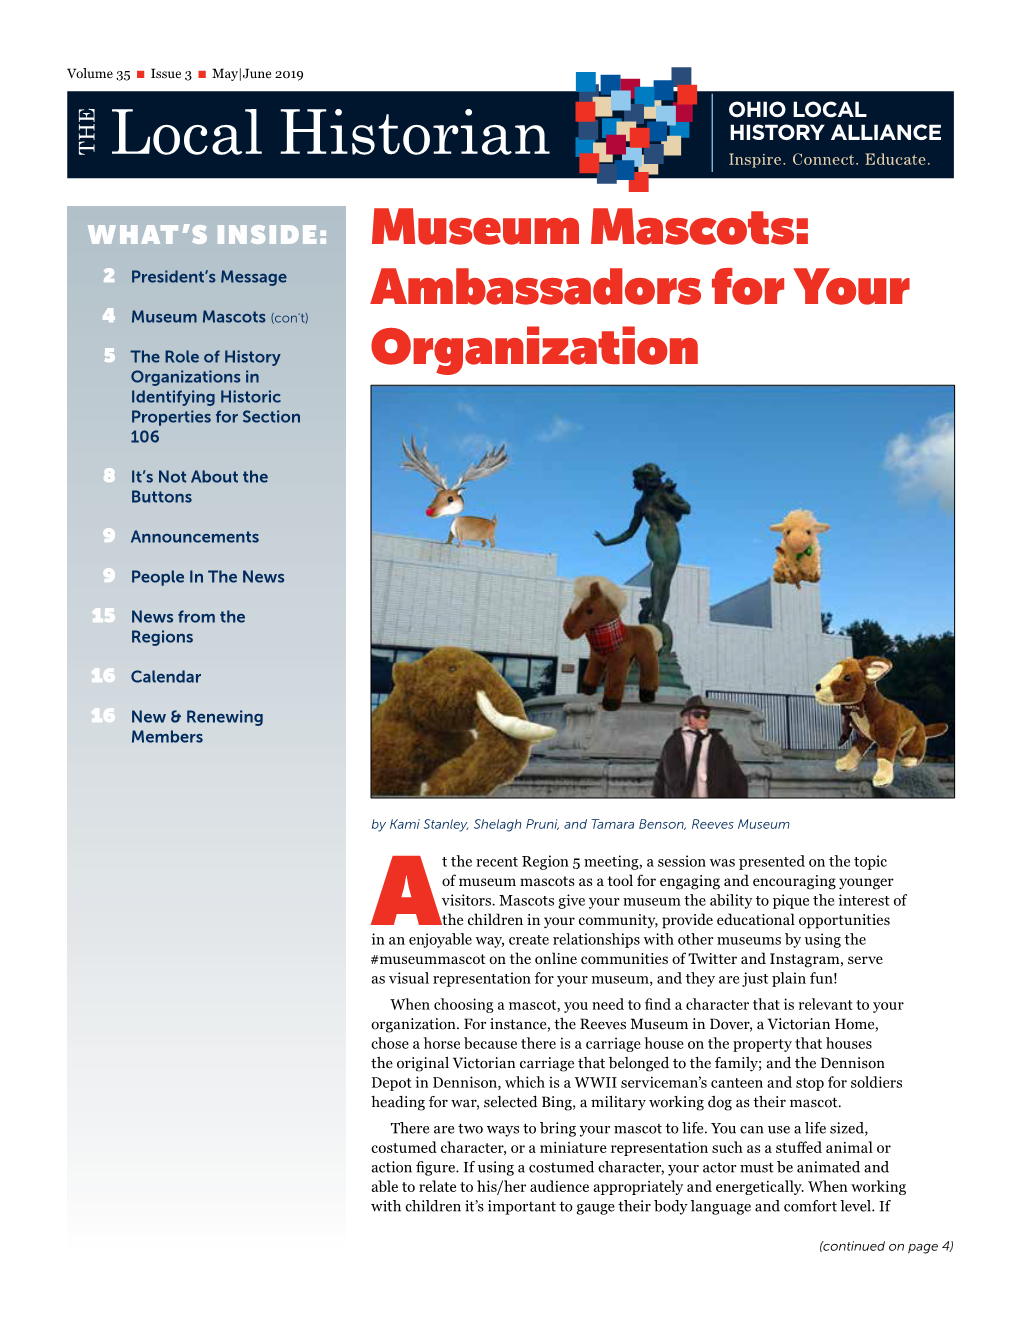 Museum Mascots